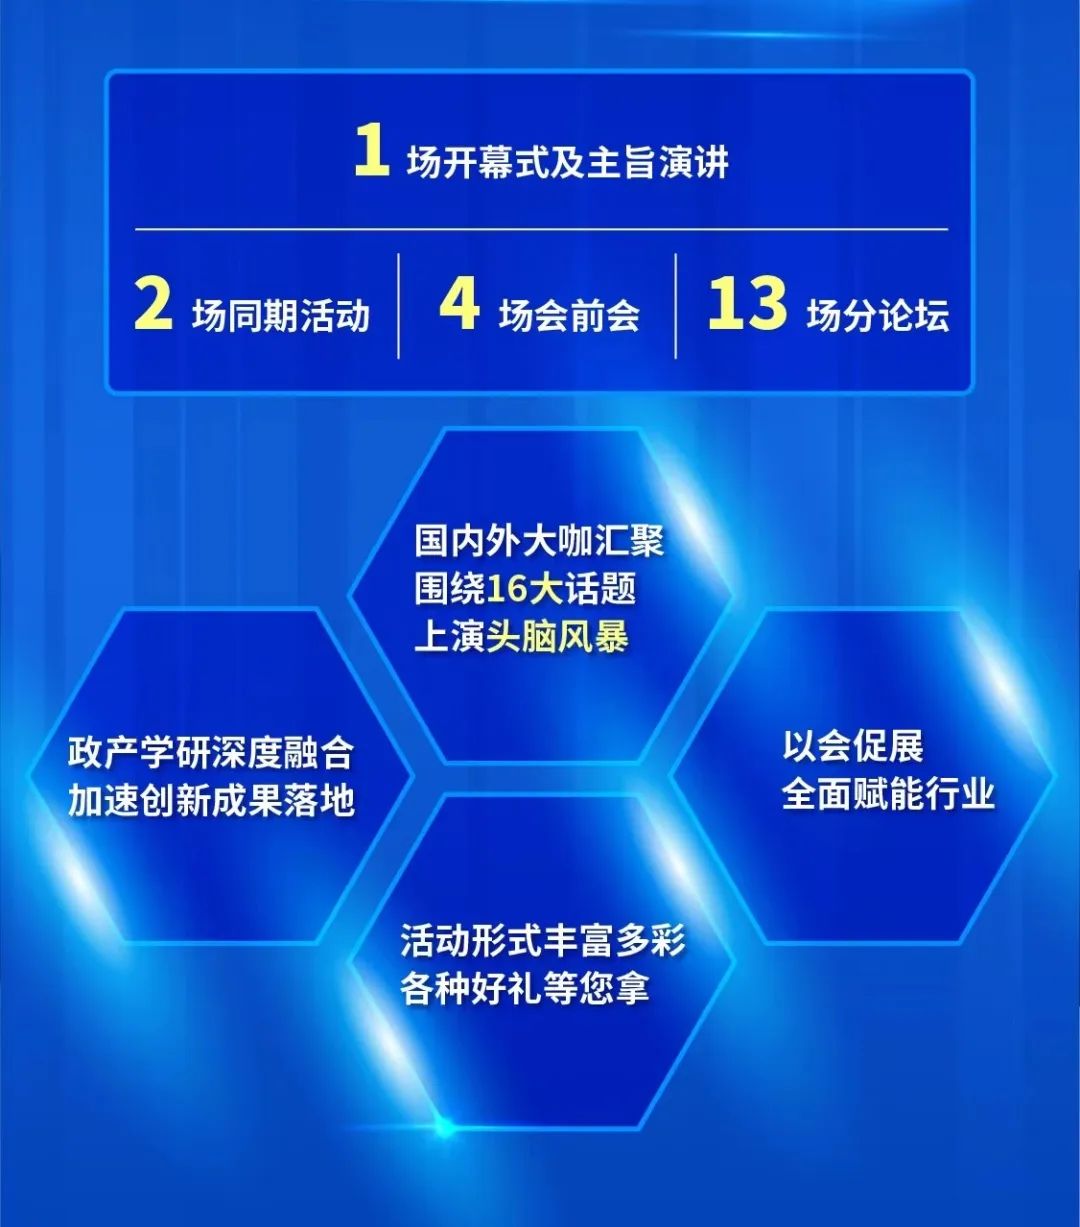 BIO-FORUM 2024 倒计时7天 | 新布局、新空间、新赛道，2024 上海国际生物技术与医药研讨会让我们“聚”在一起！